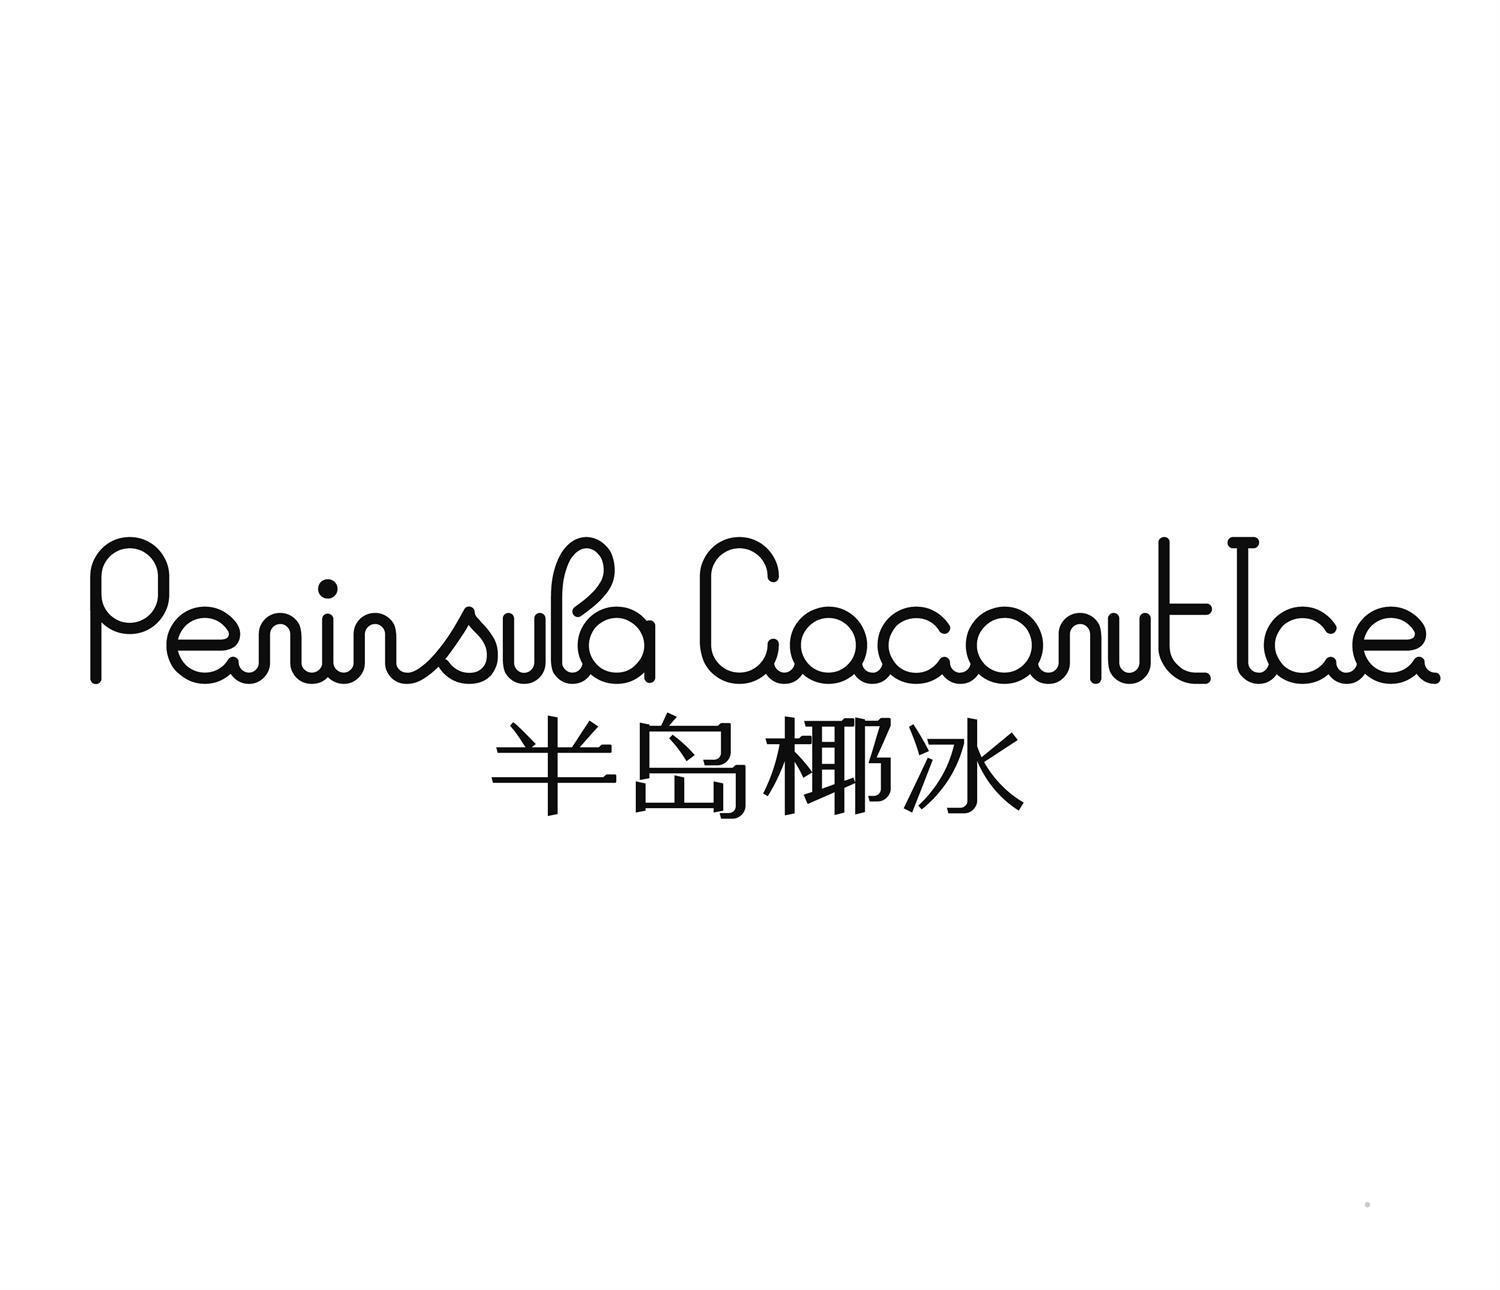 PENINSULA COCONUT ICE 半岛椰冰logo